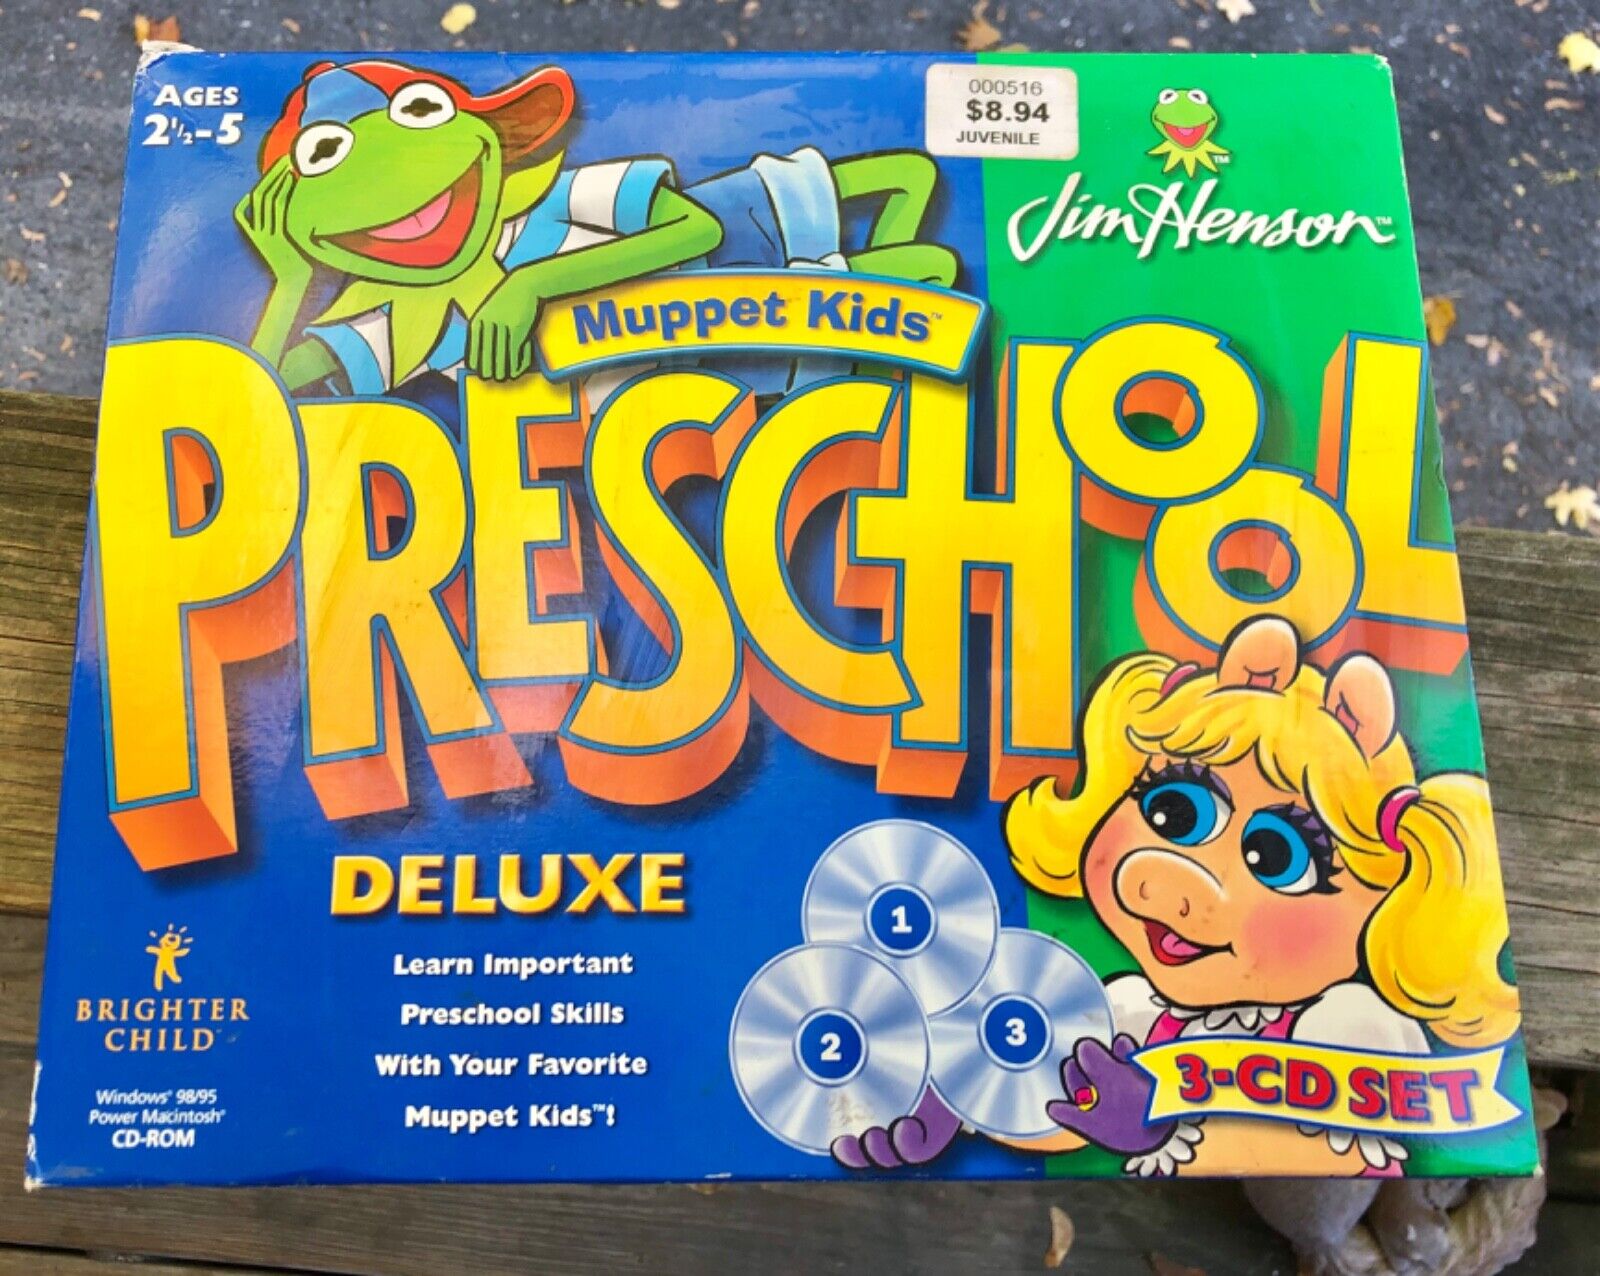 Muppet Kids Preschool Jim Henson Deluxe 3 CD Set NIB